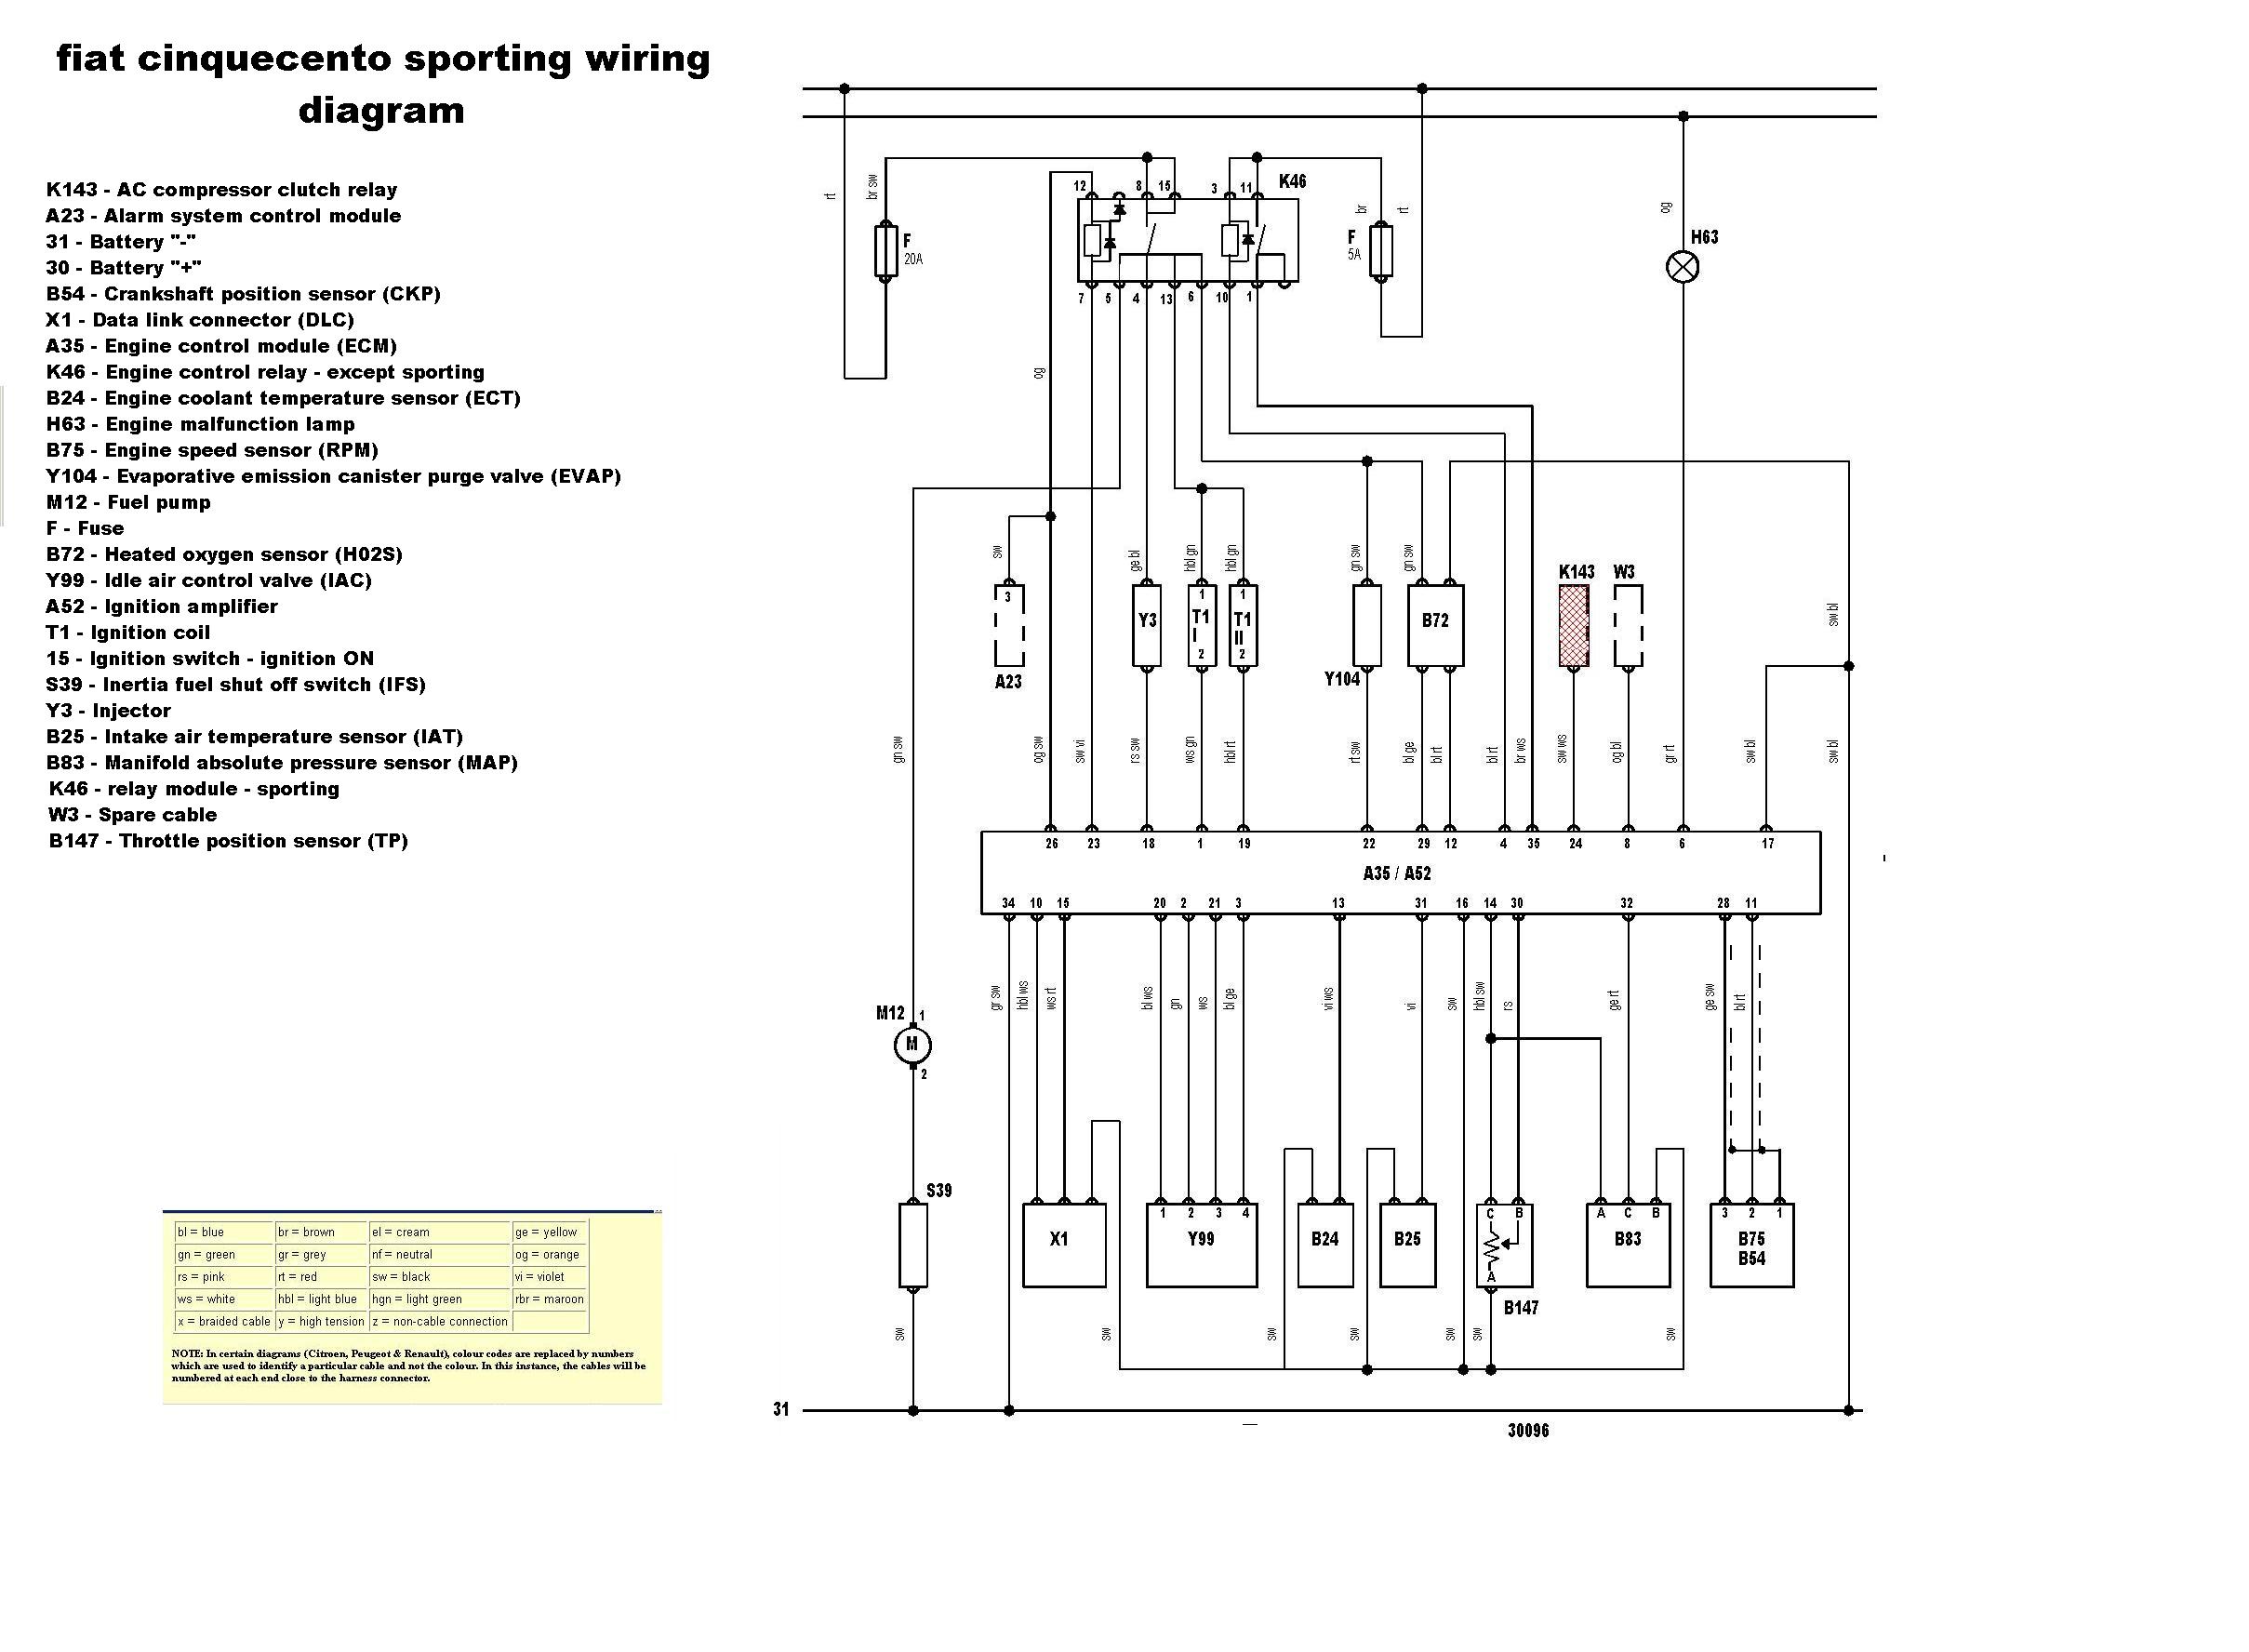 cinquecento_SPORTING_wiring_diagram